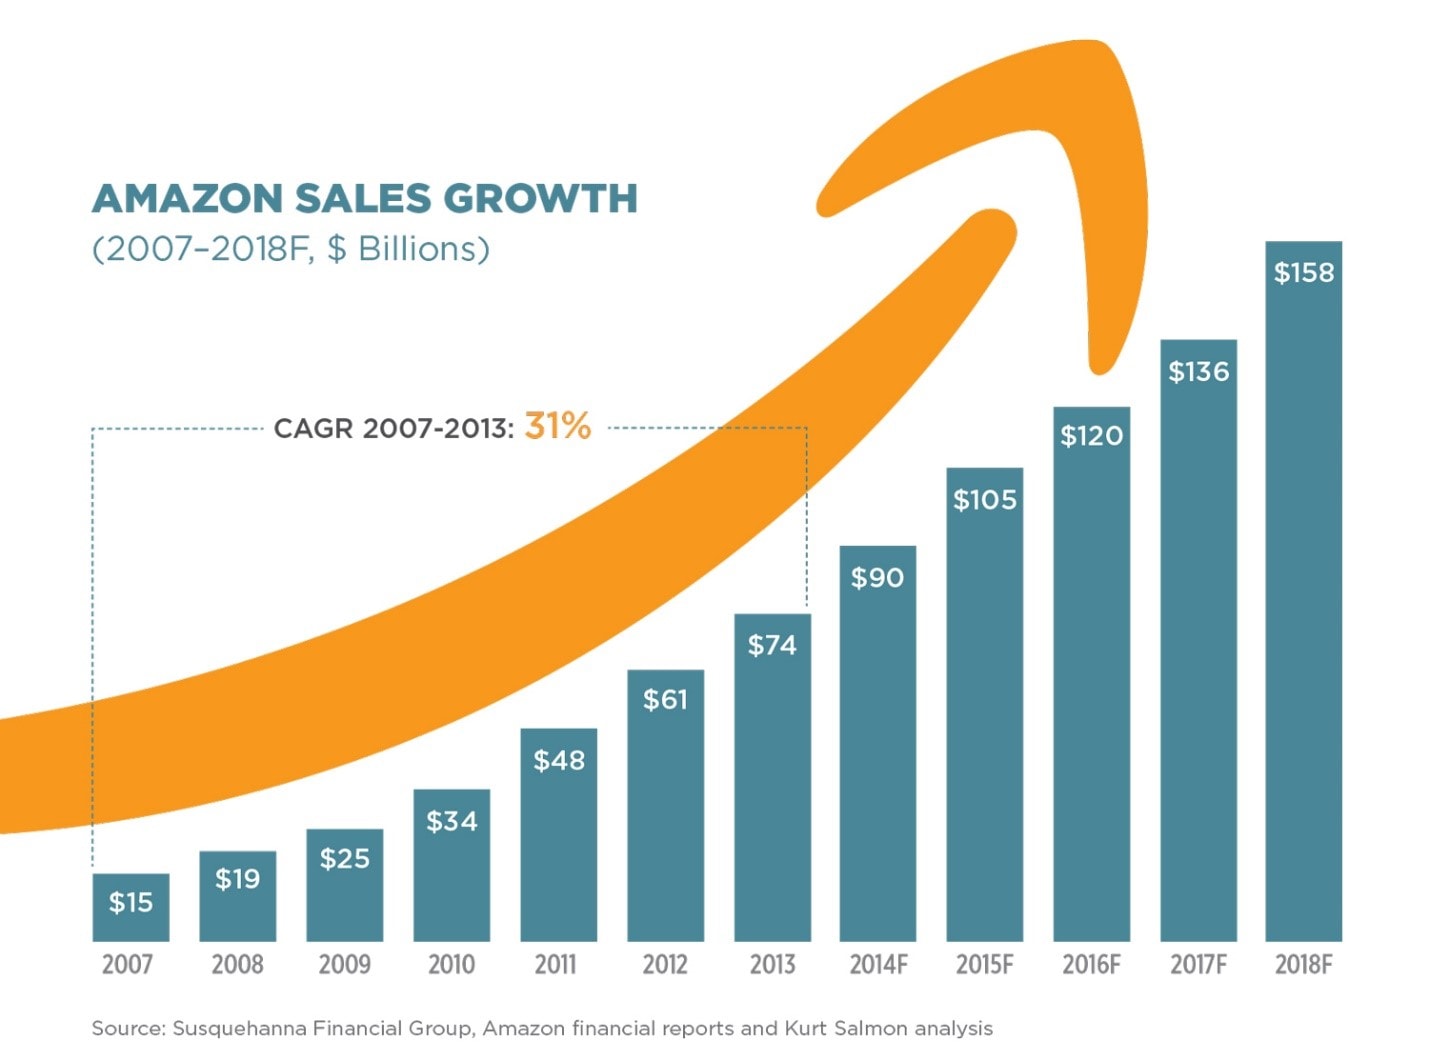 Amazon Sales growth